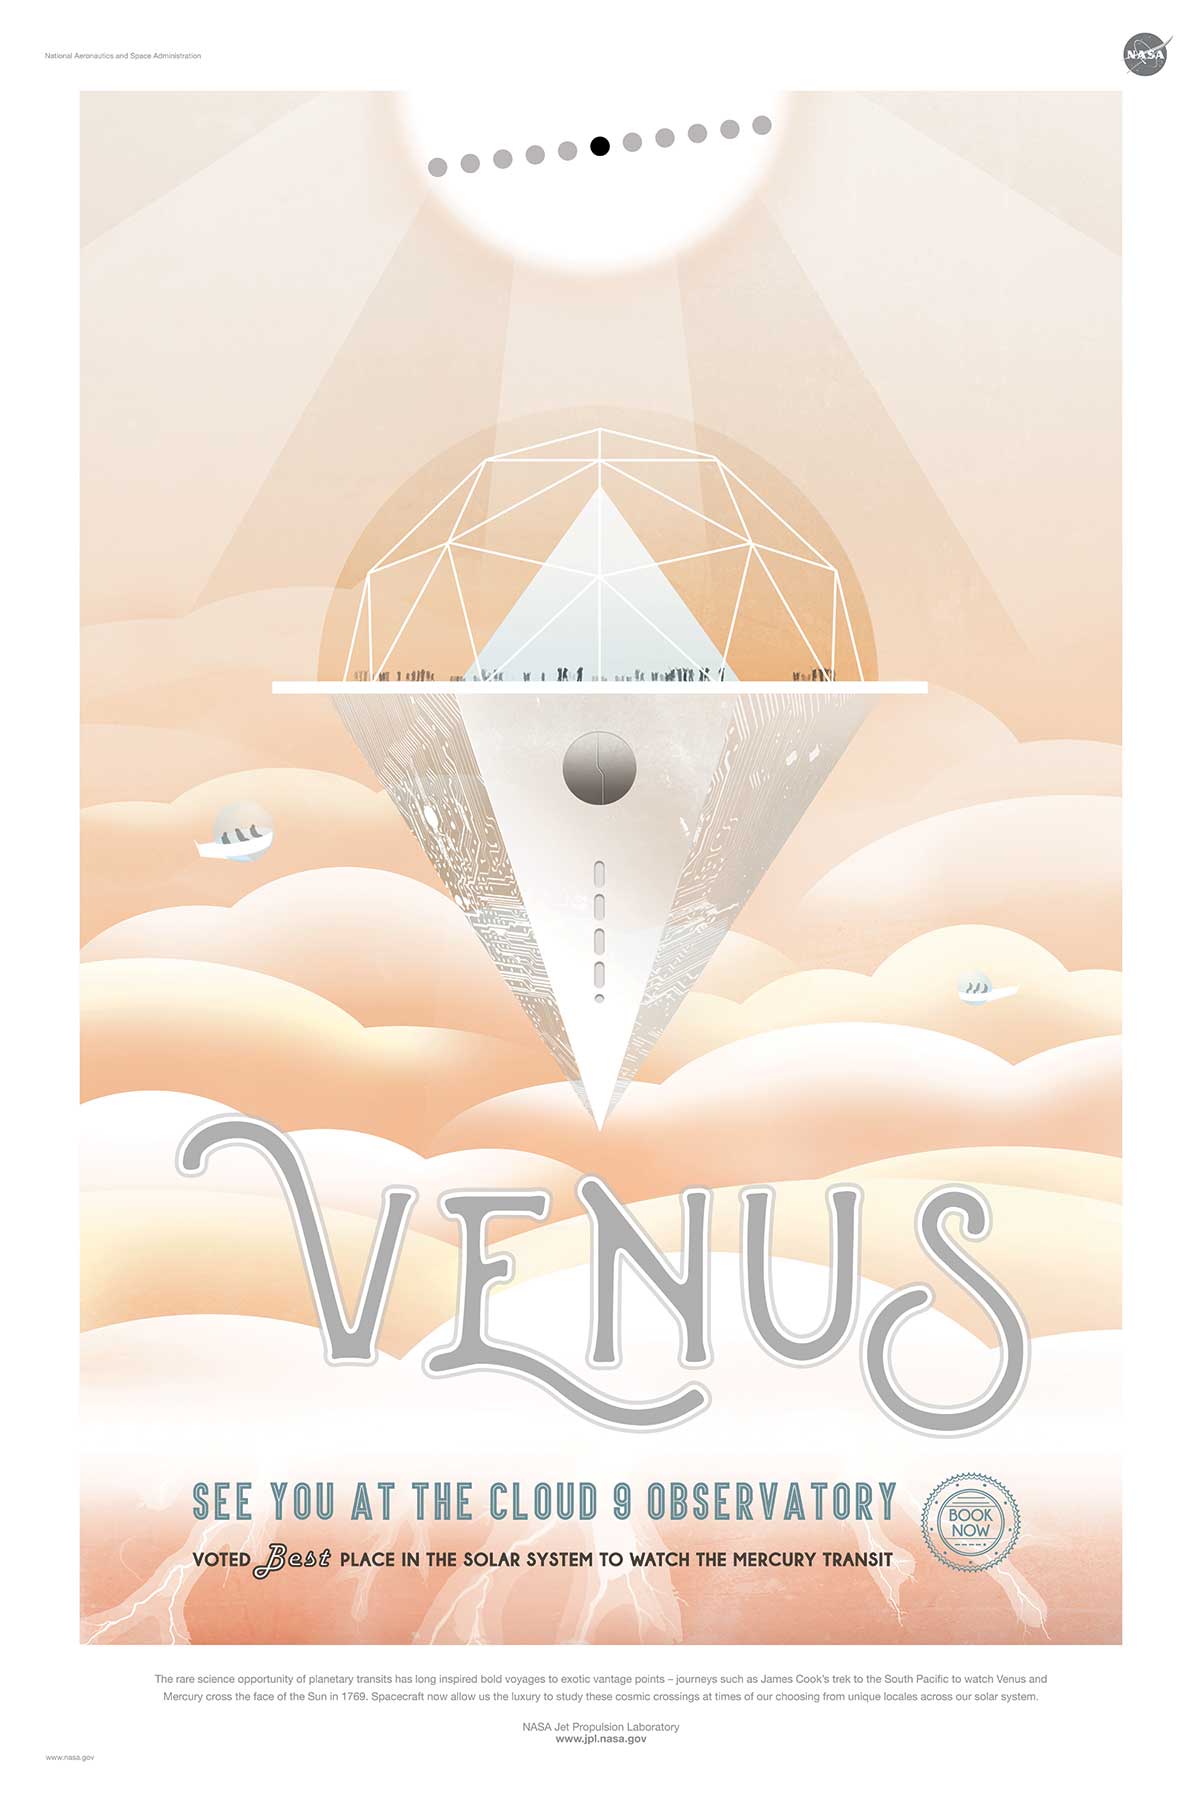 NASA poster promoting space travel to Venus